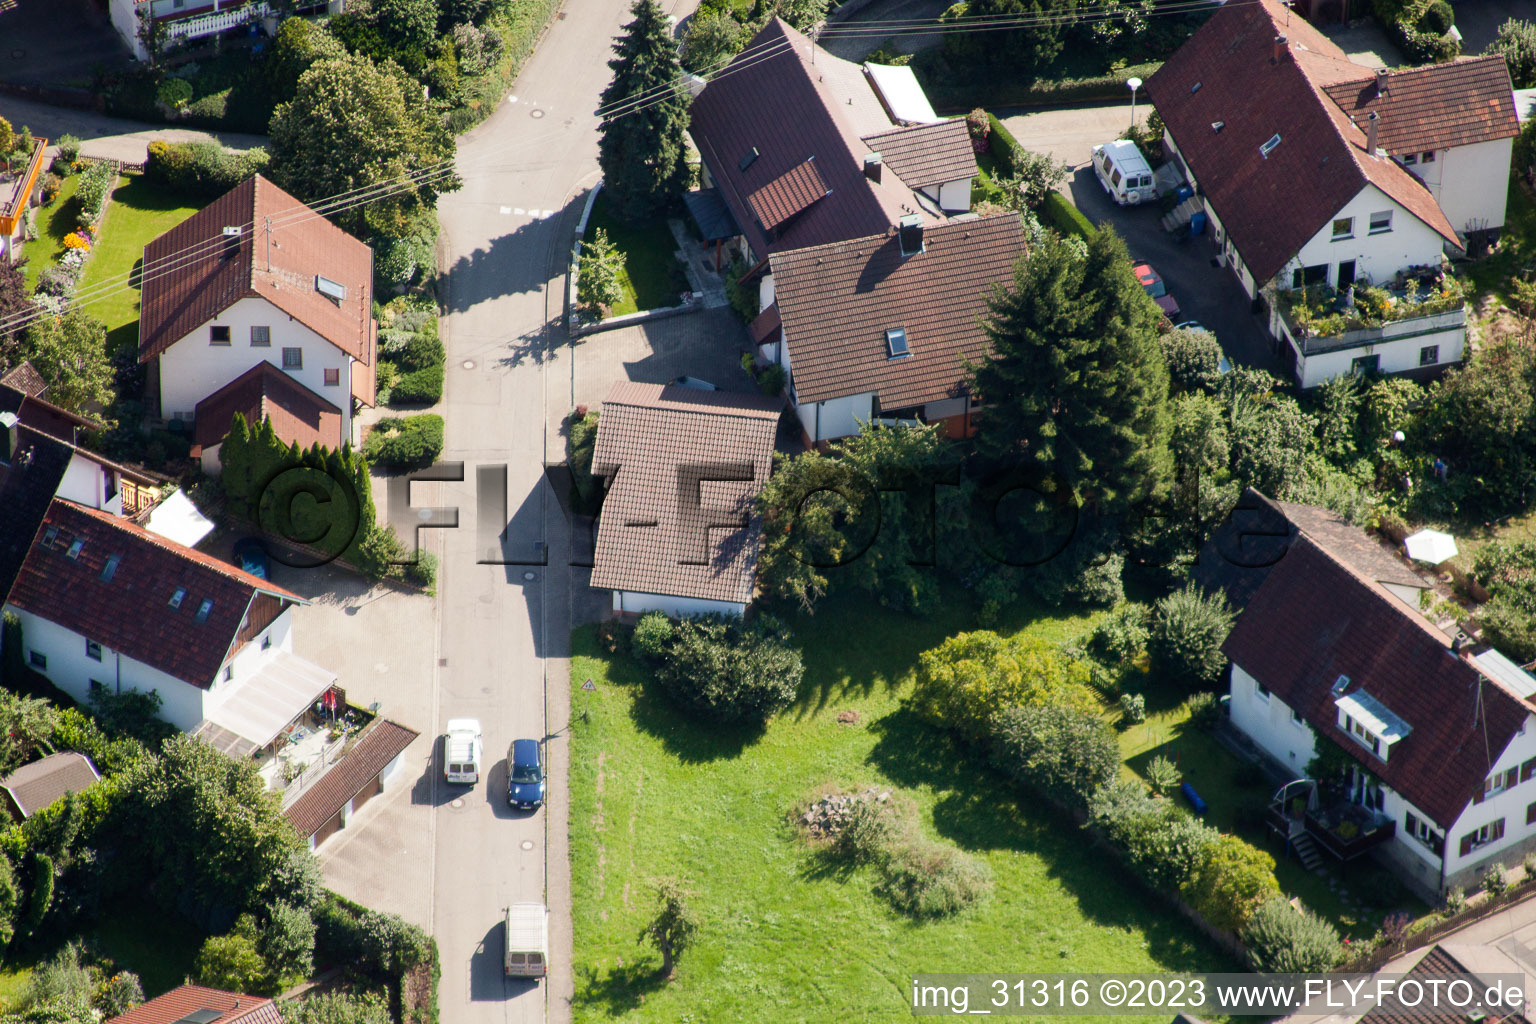 Drone recording of Varnhalt, Gartenstr in the district Gallenbach in Baden-Baden in the state Baden-Wuerttemberg, Germany